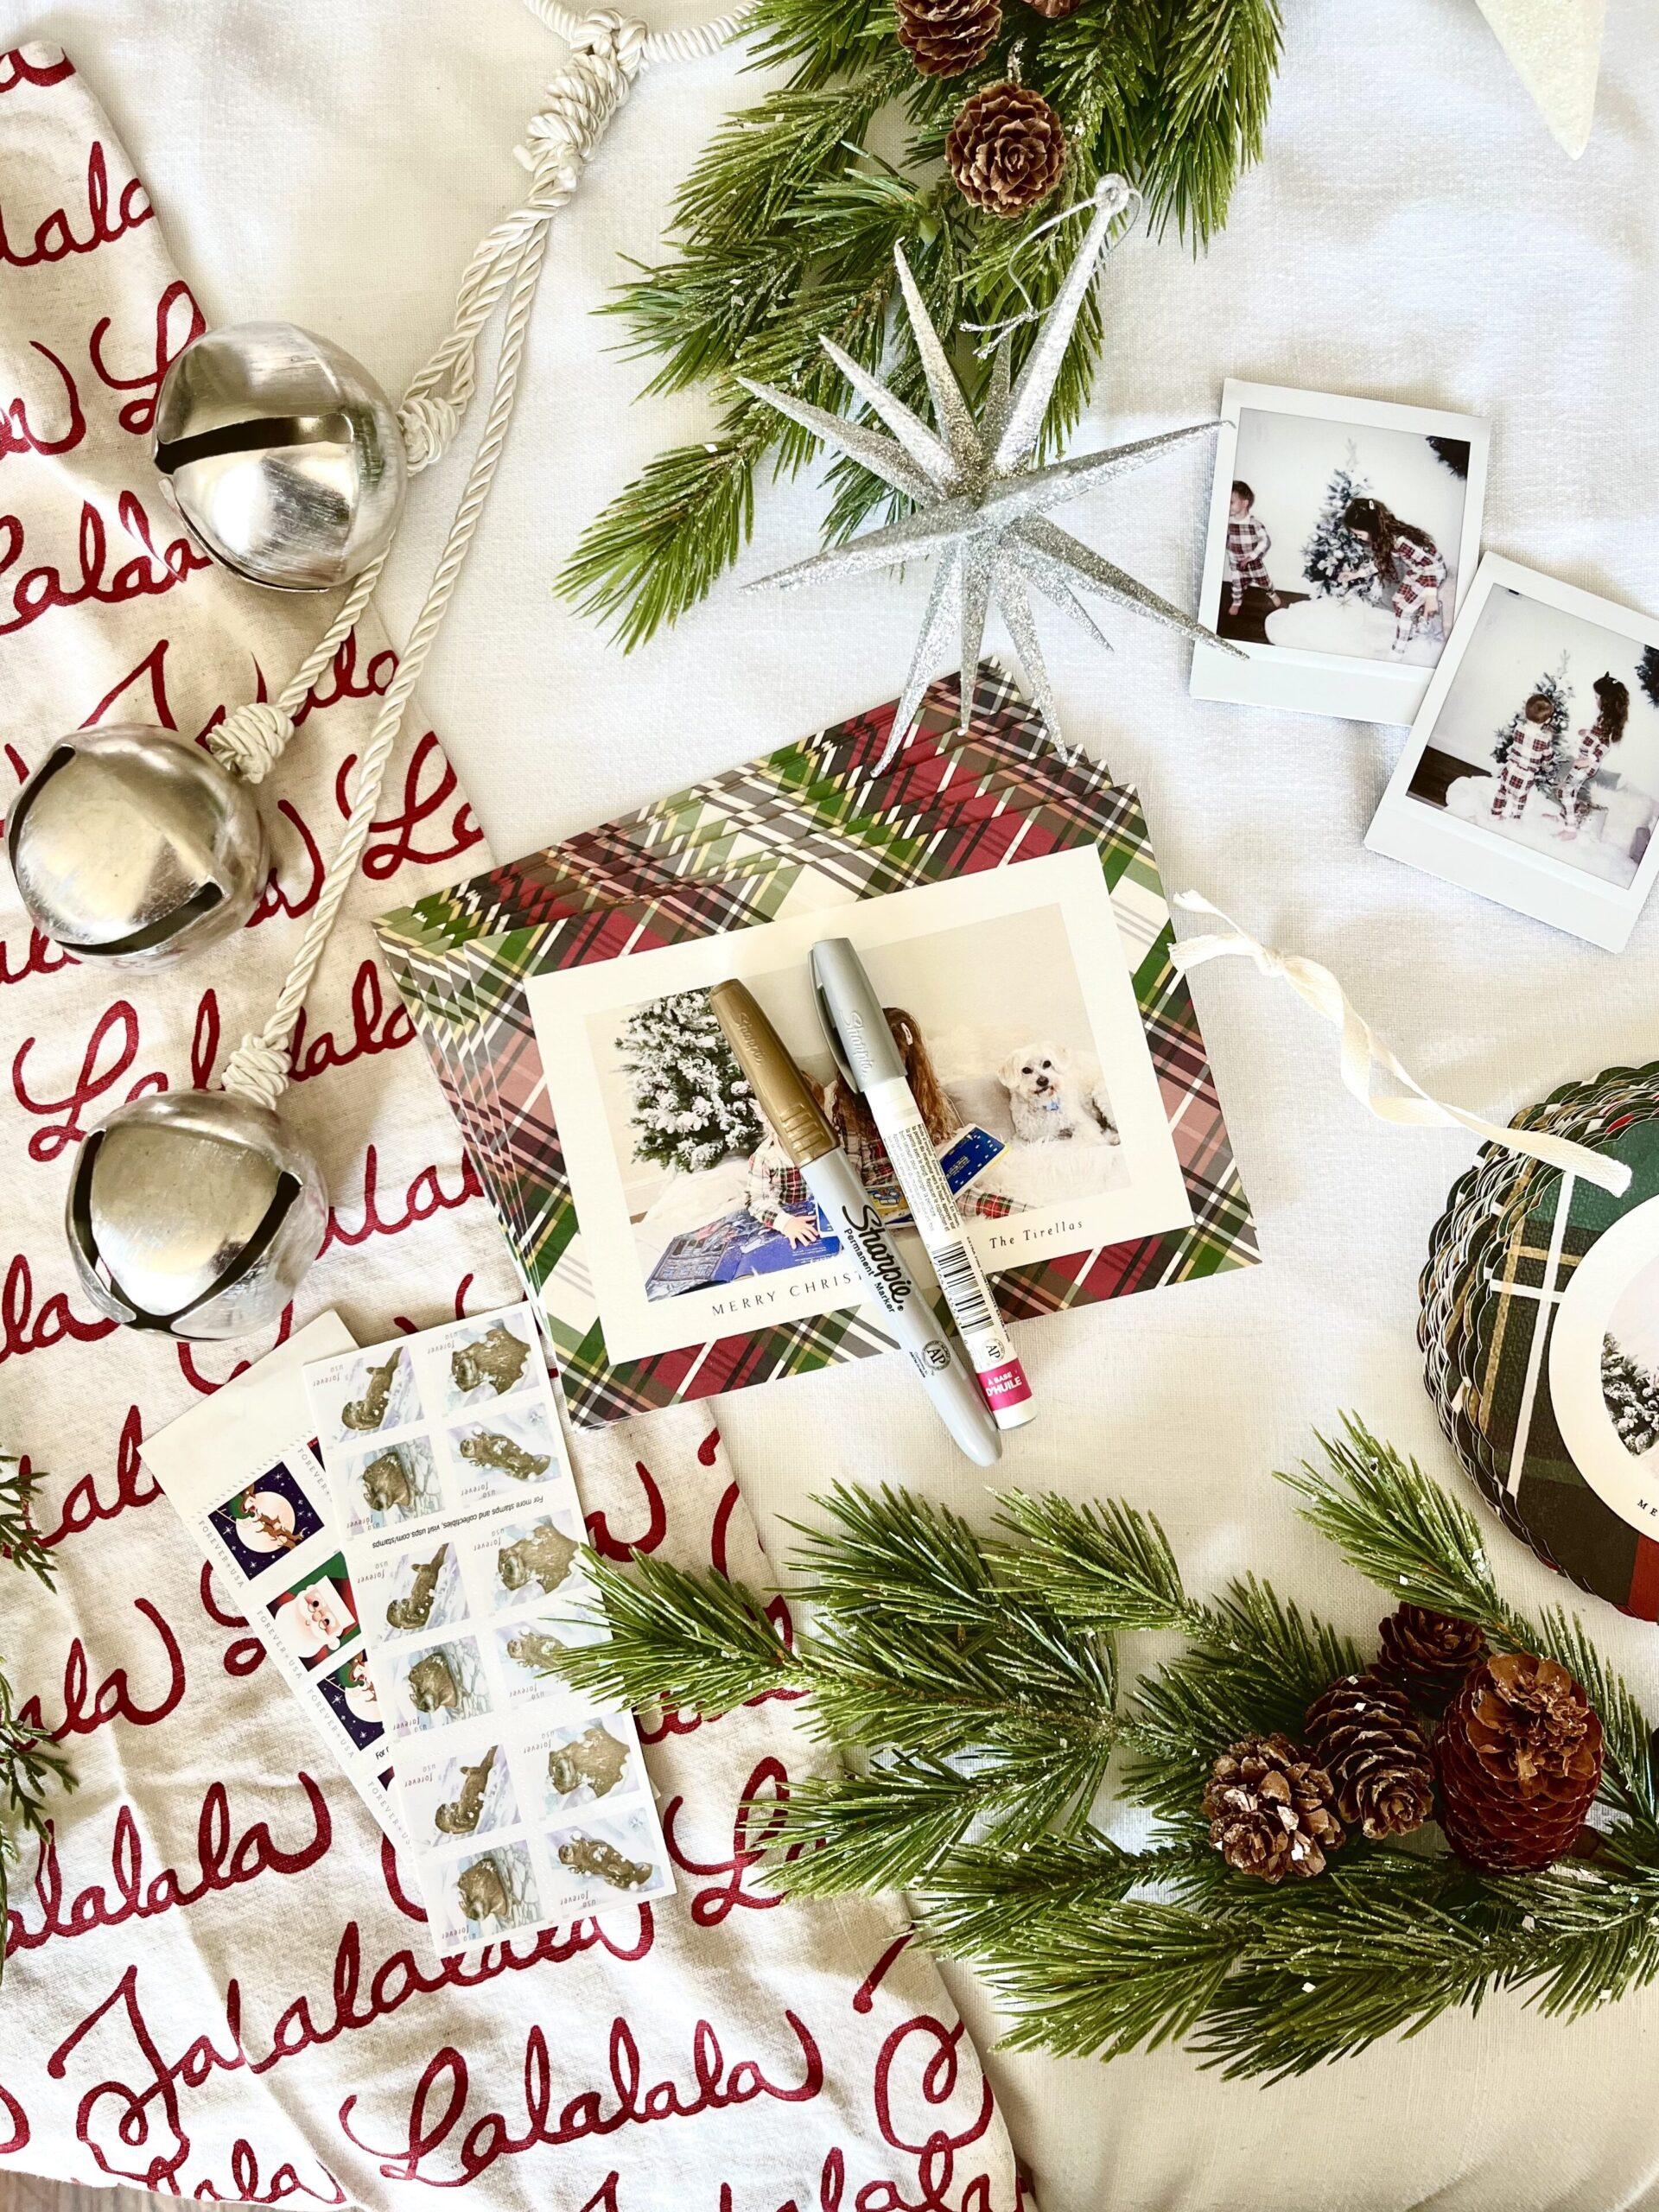 Christmas cards, photos, and pen